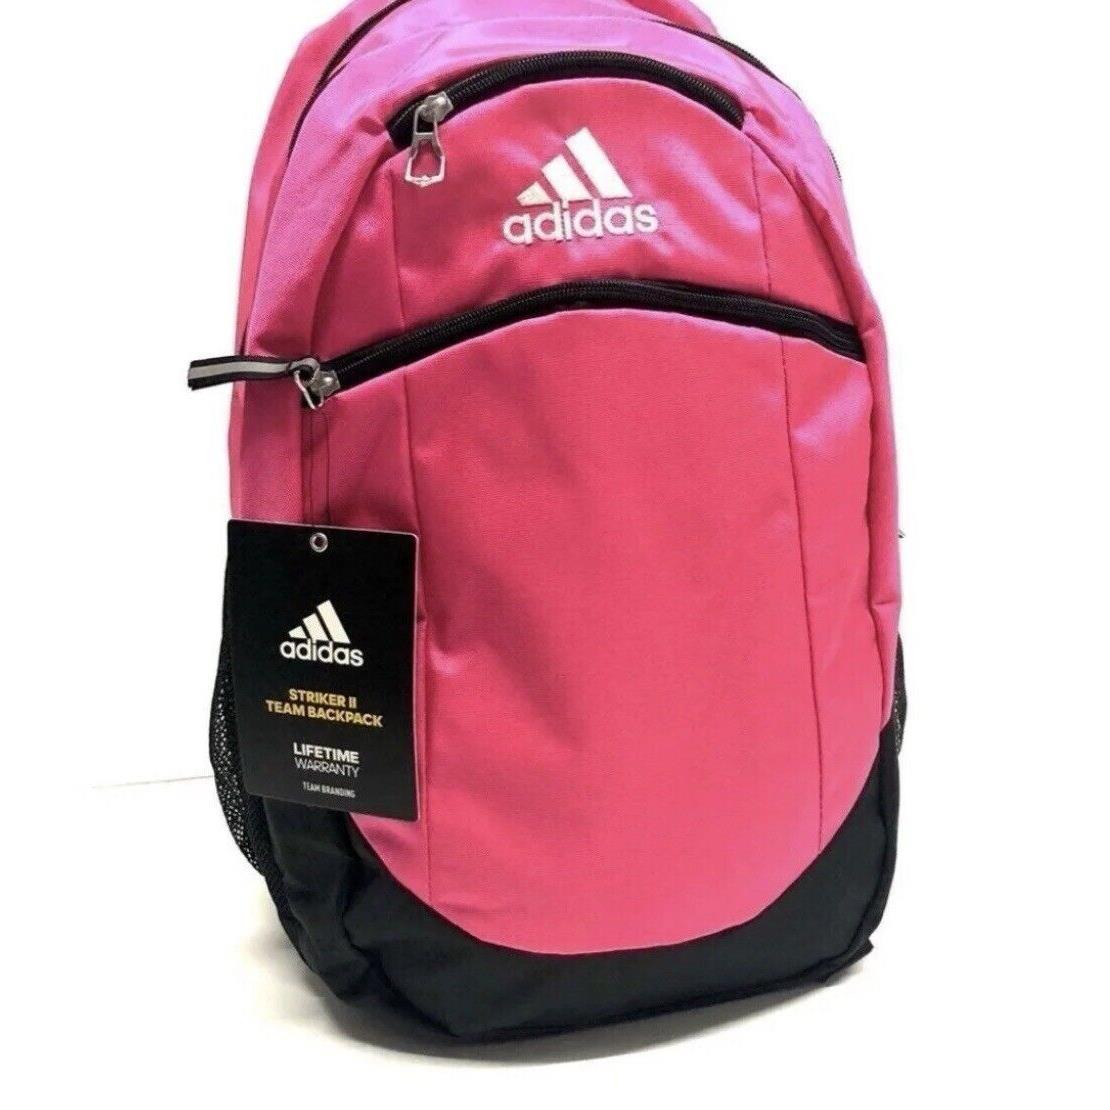 Adidas Backpack Bag Hot Pink Laptop Storage Full Size Large Standard Neon